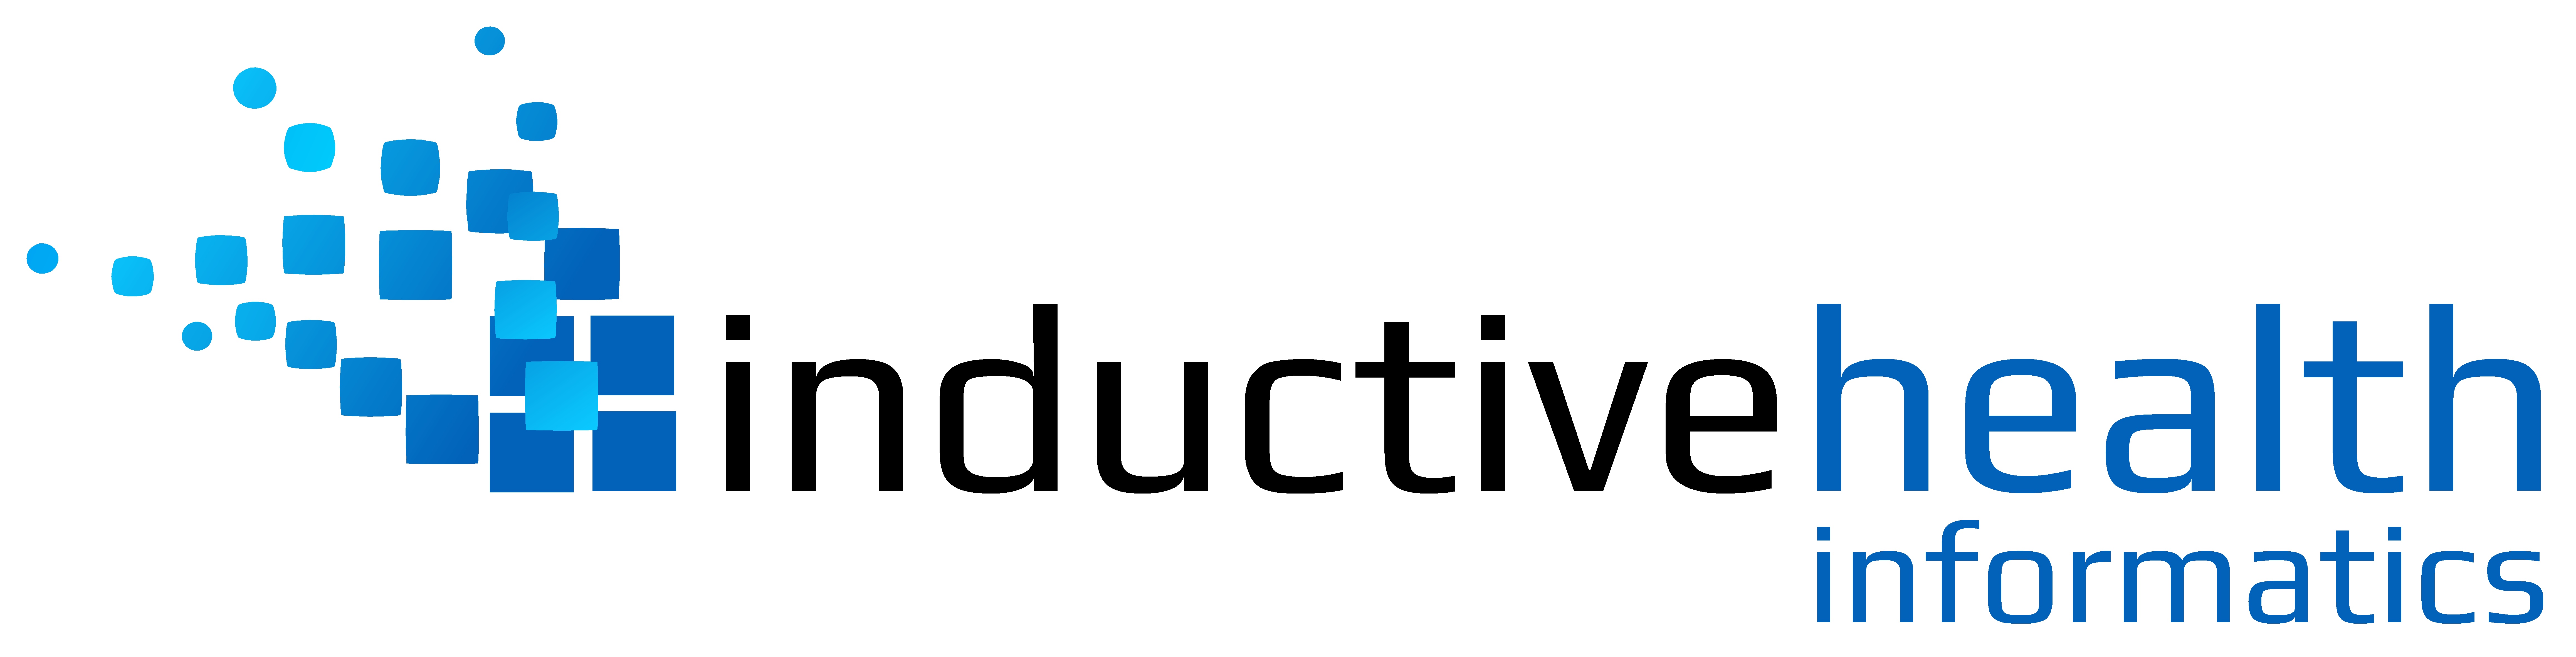 InductiveHealth Logo - Master (002).jpg